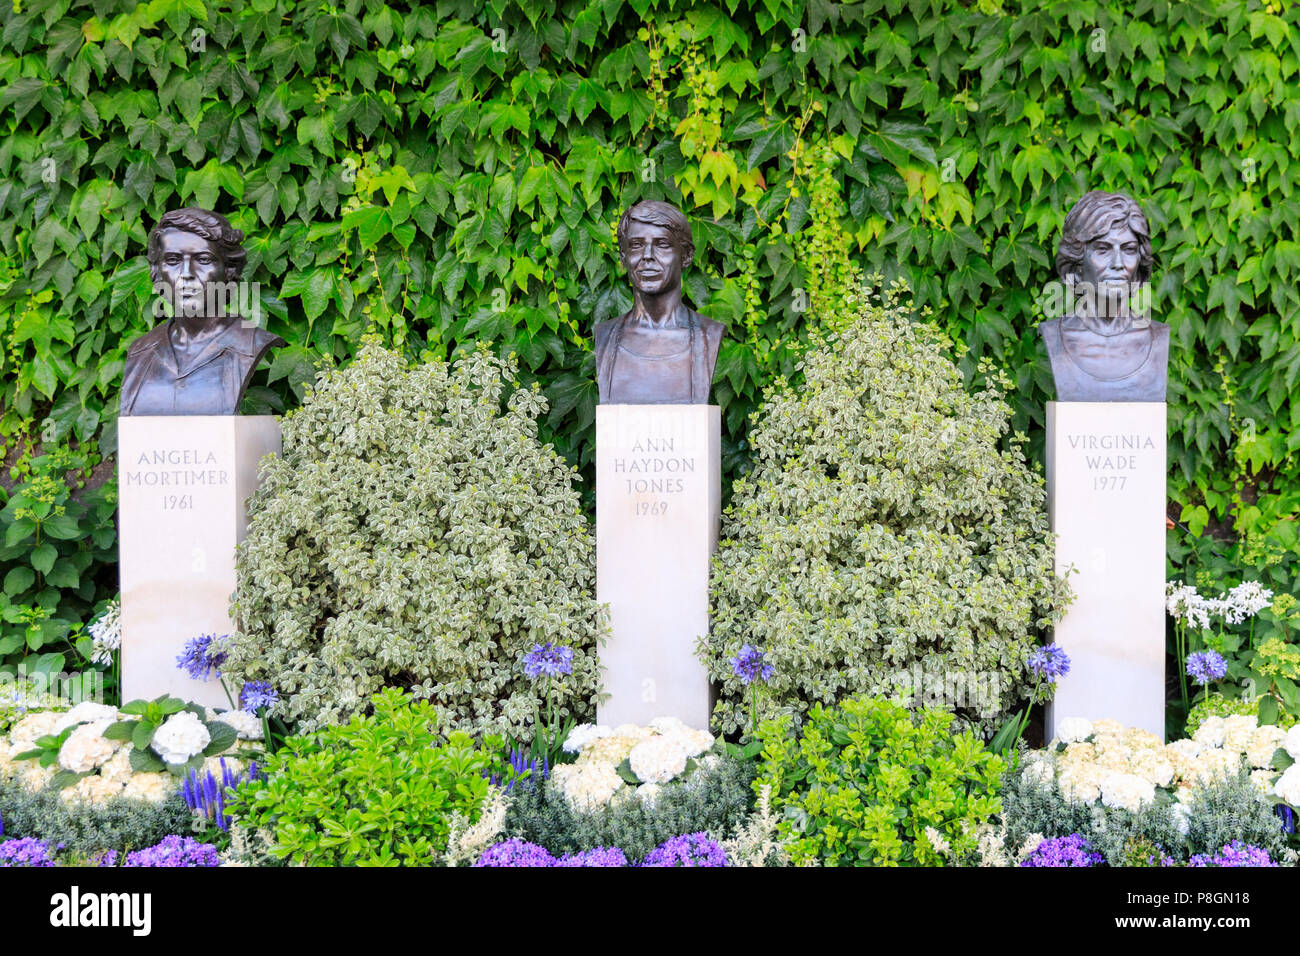 Sculpture busts of British Ladies Champions Angela Mortimer, Ann Jones, Virginia Wade, grounds at Wimbledon All England Lawn Tennis Club, UK Stock Photo